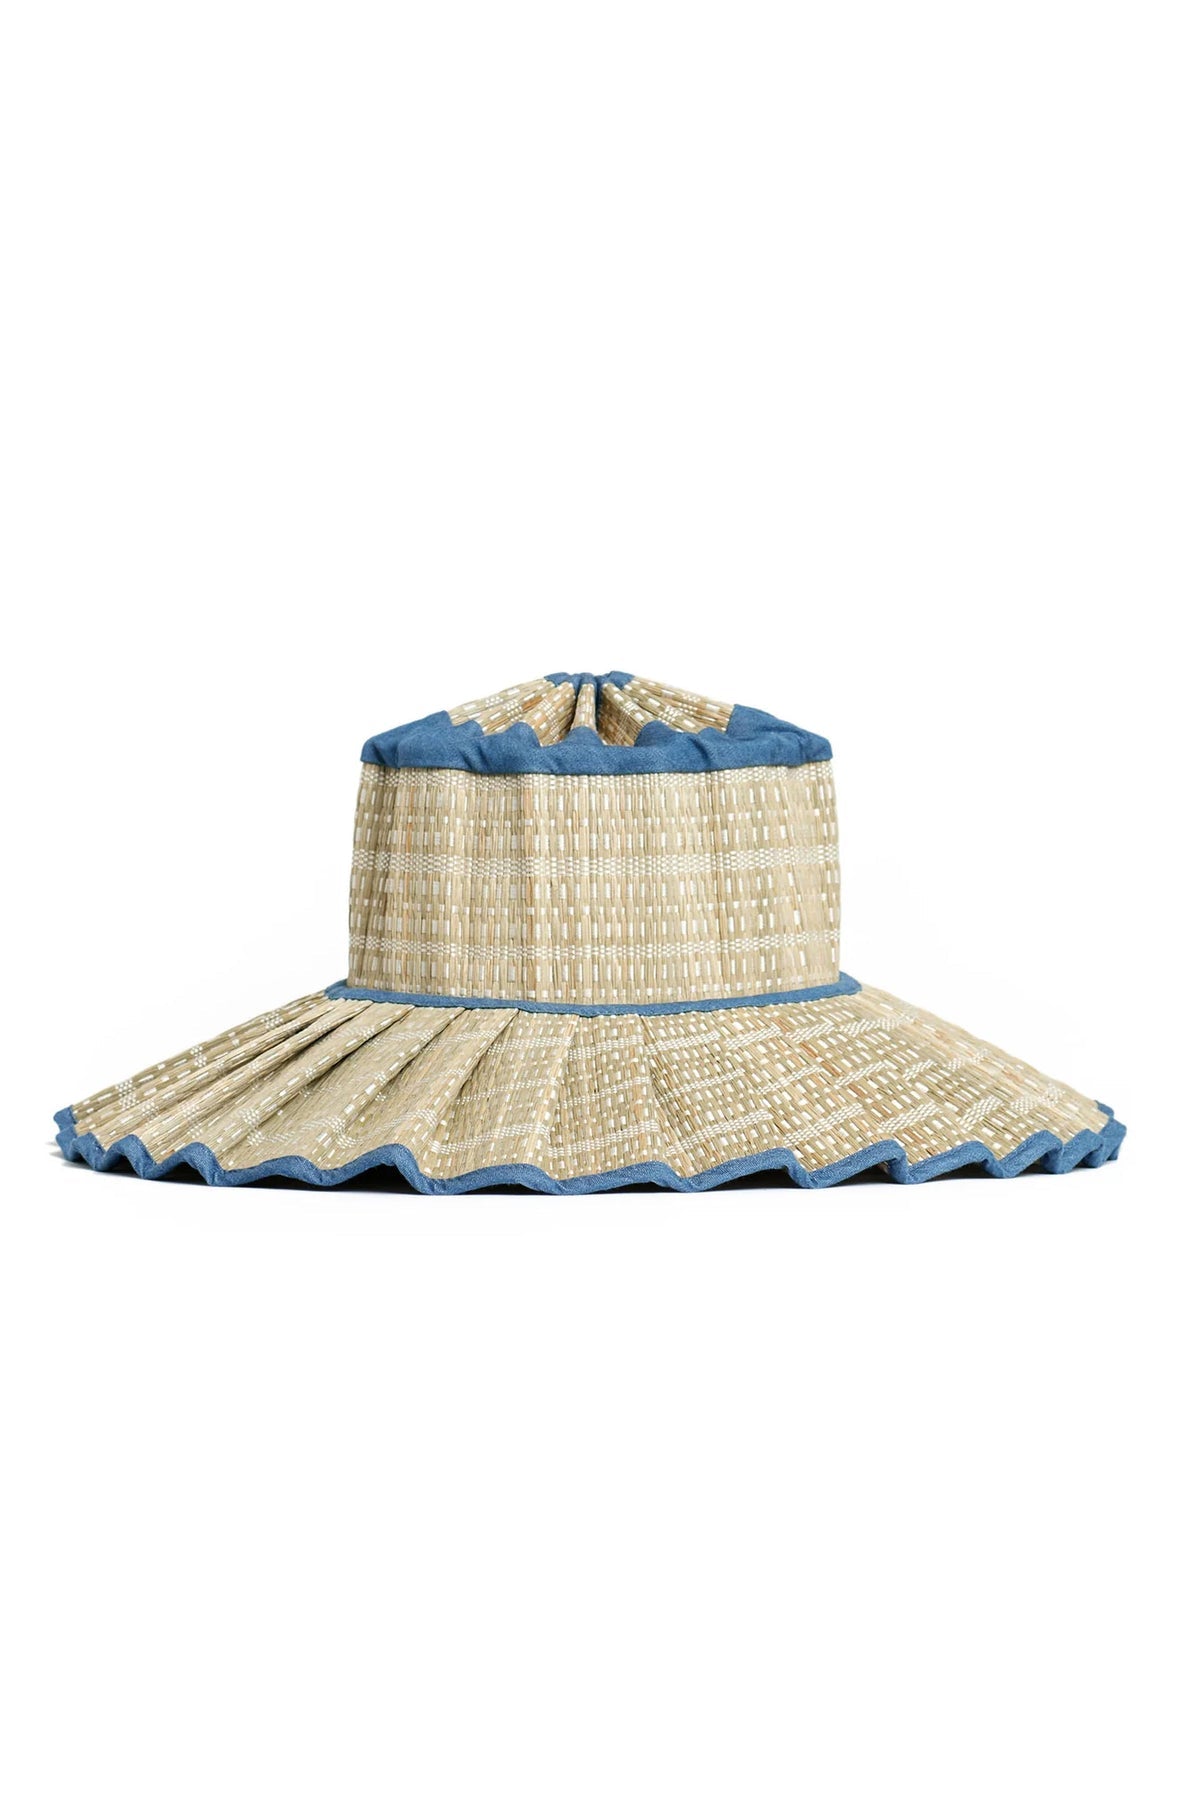 Swanbourne Beach Capri Child Hat by Lorna Murray | HerStory